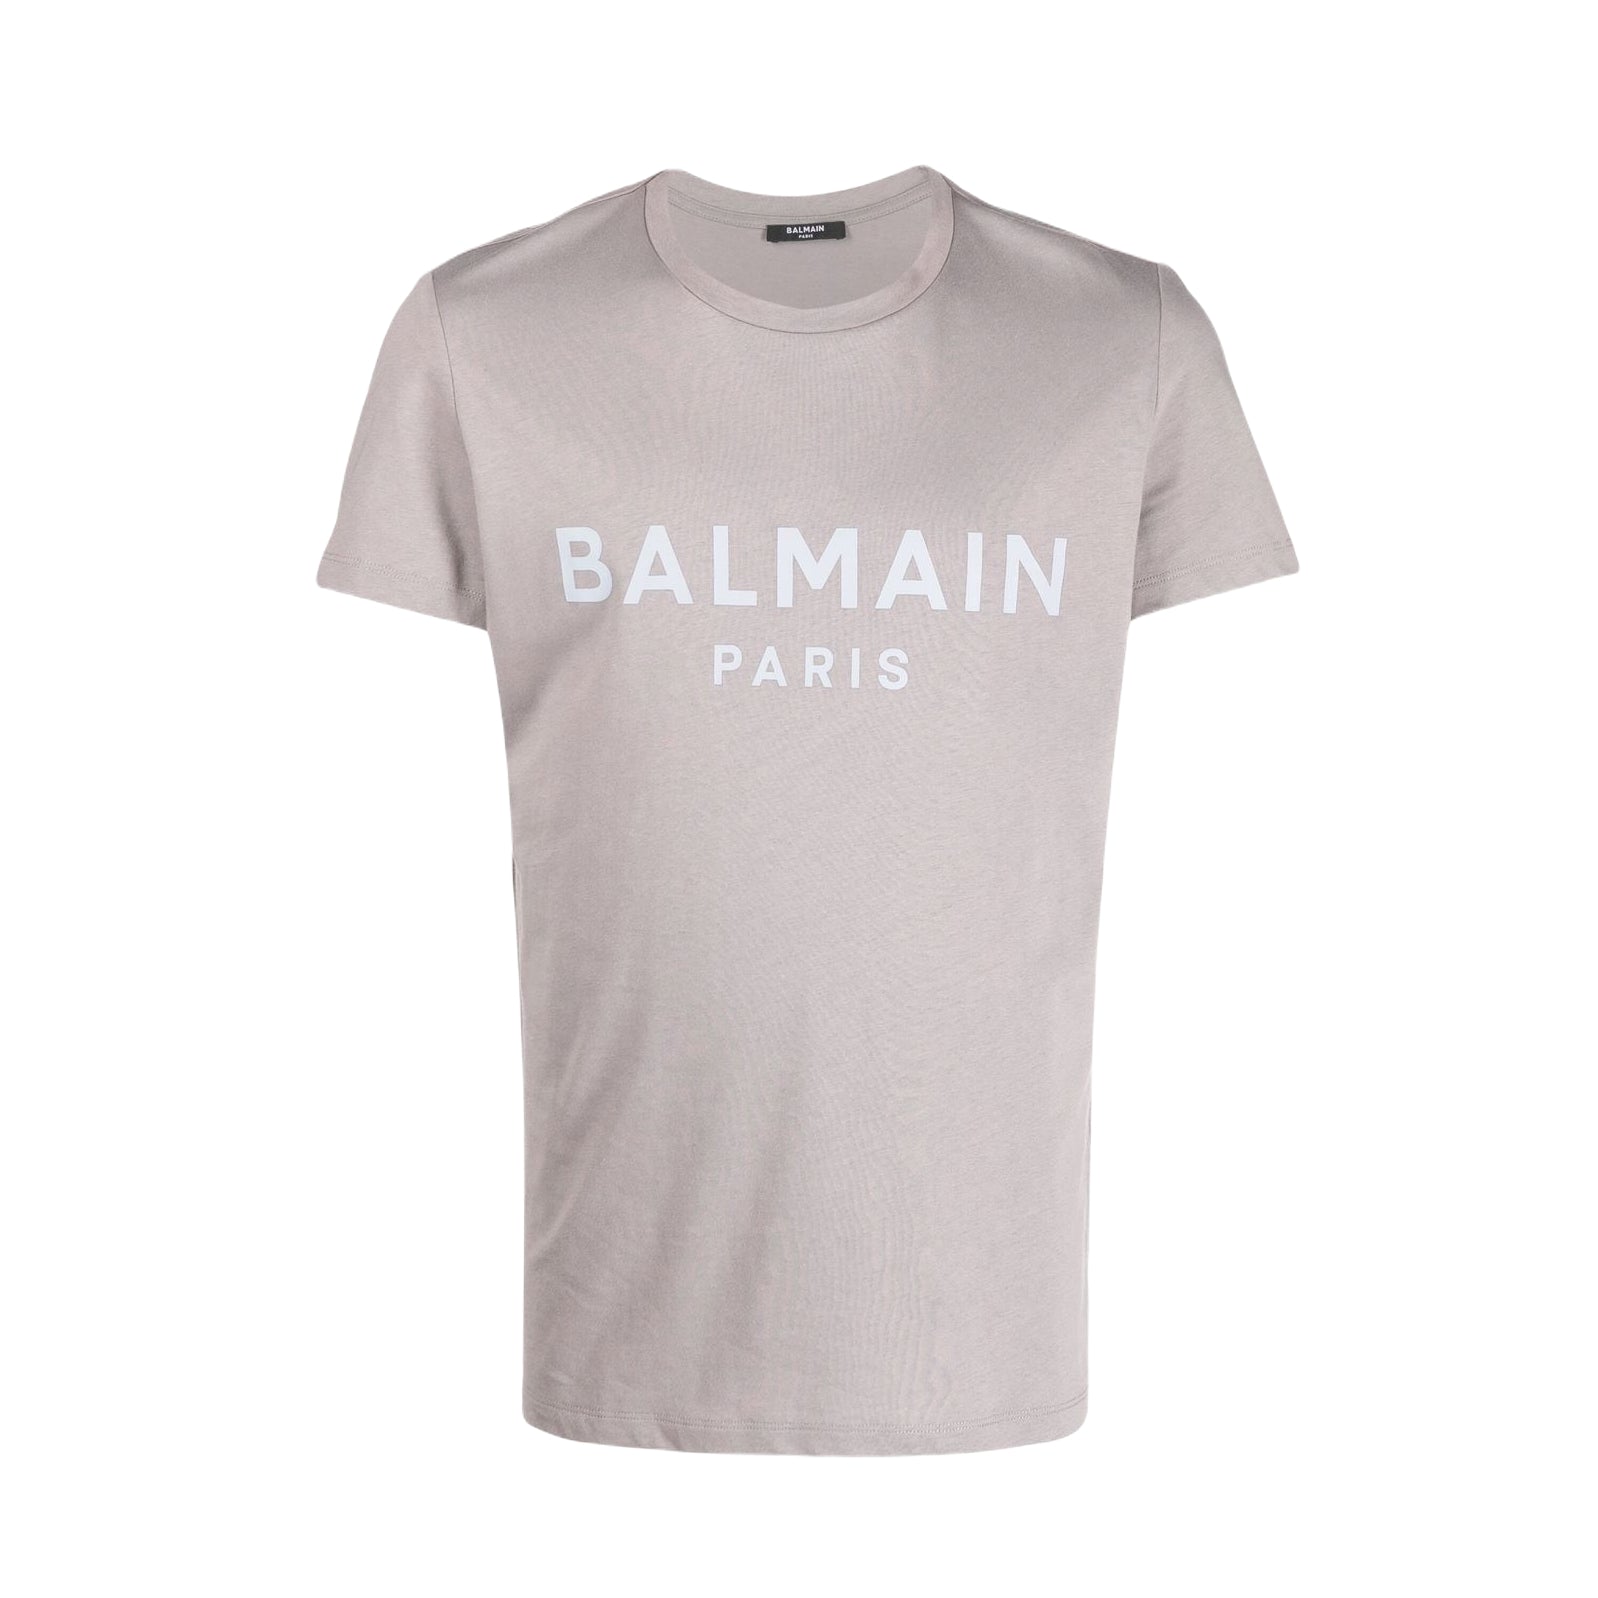 Balmain Paris Logo T-Shirt - Grey - Escape Menswear